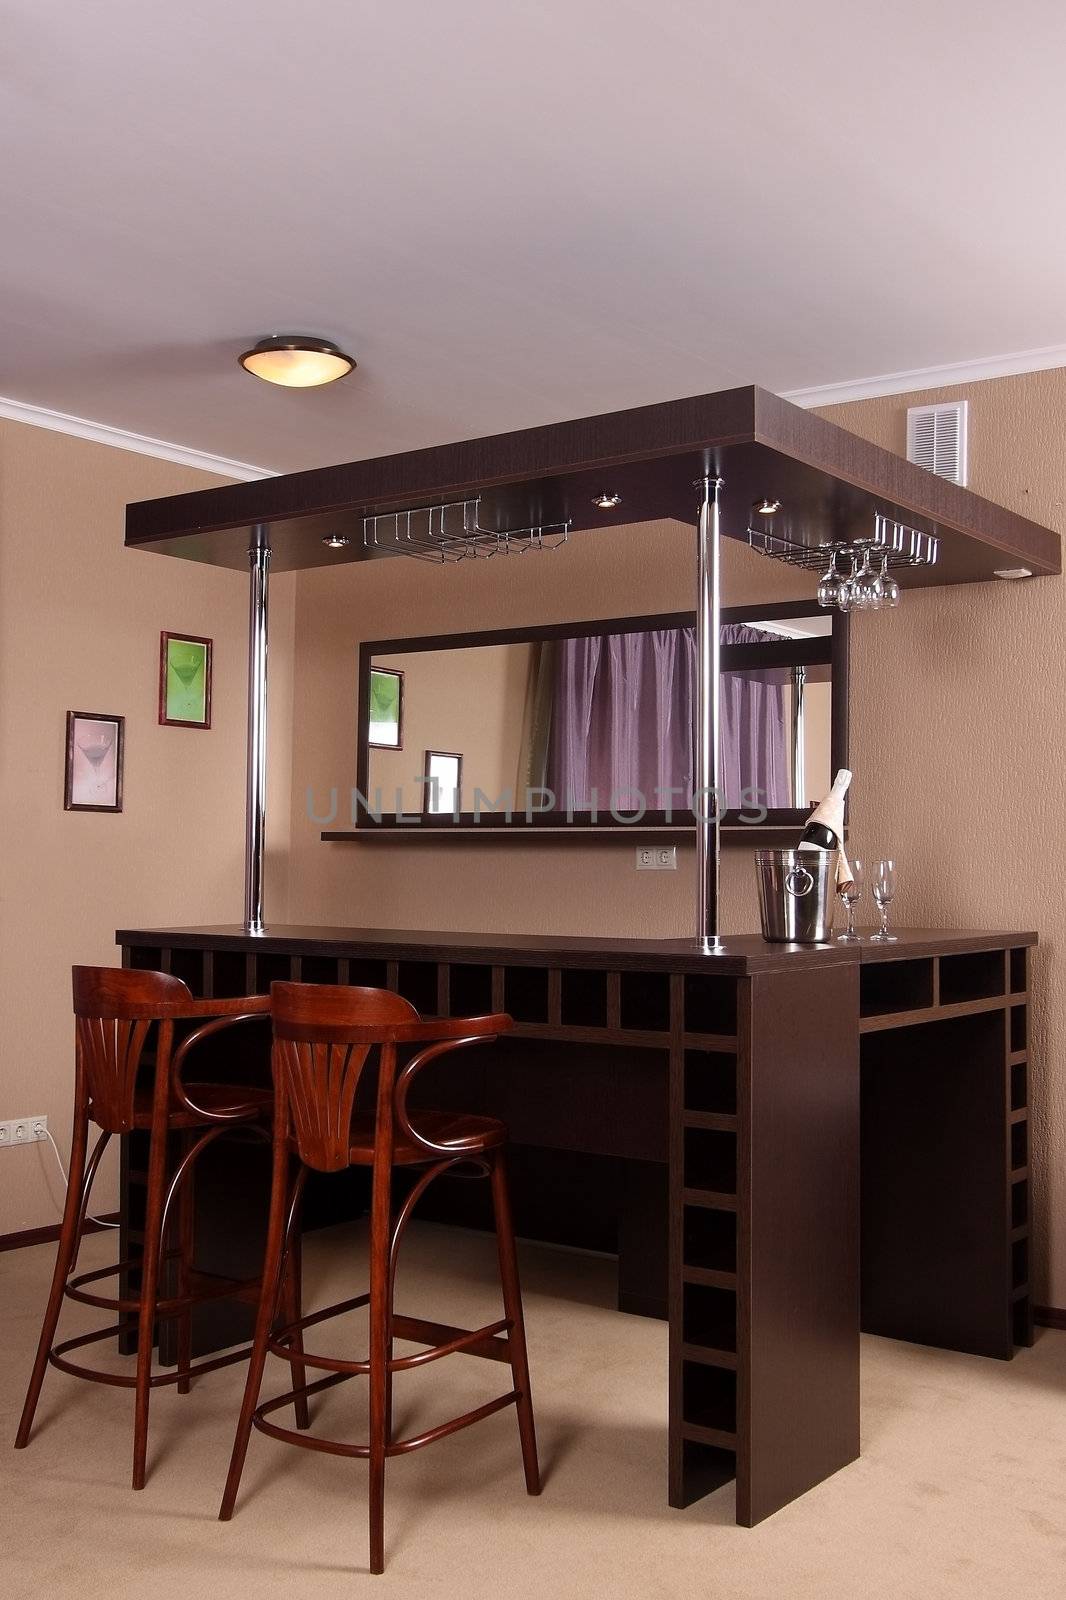 Modern interior with a bar rack